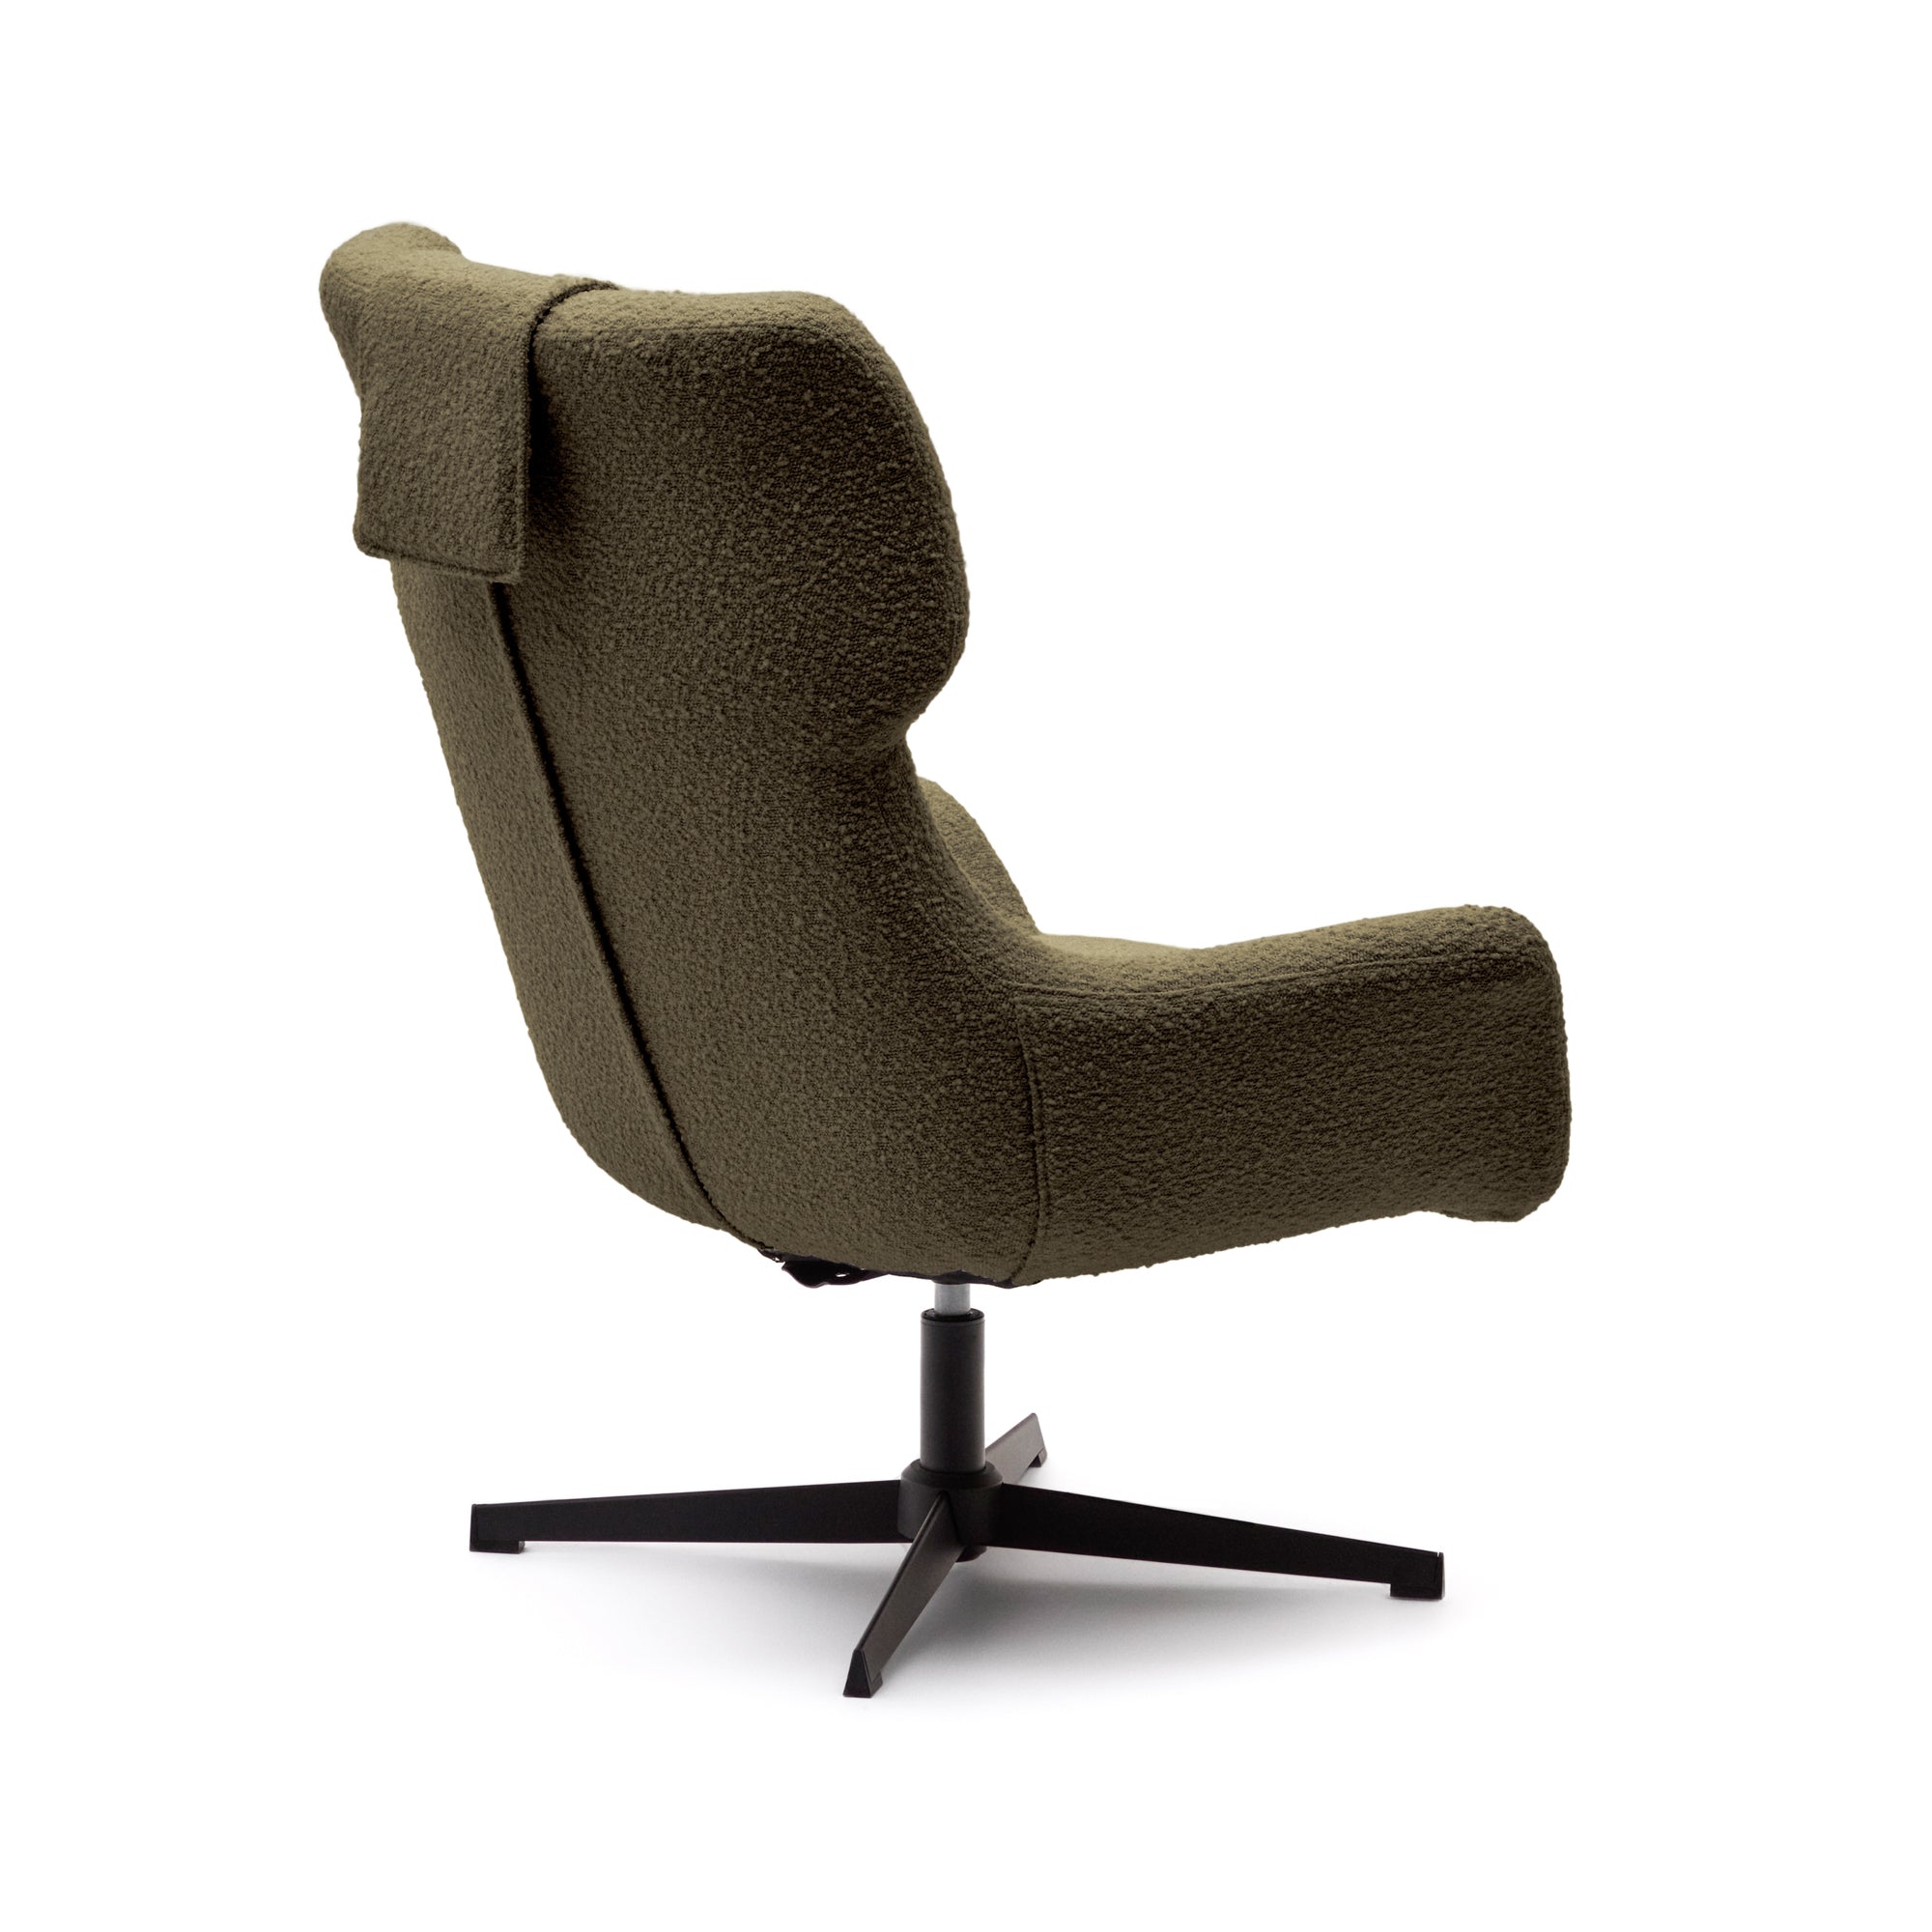 Zalina swivel armchair in dark green shearling and steel with black finish